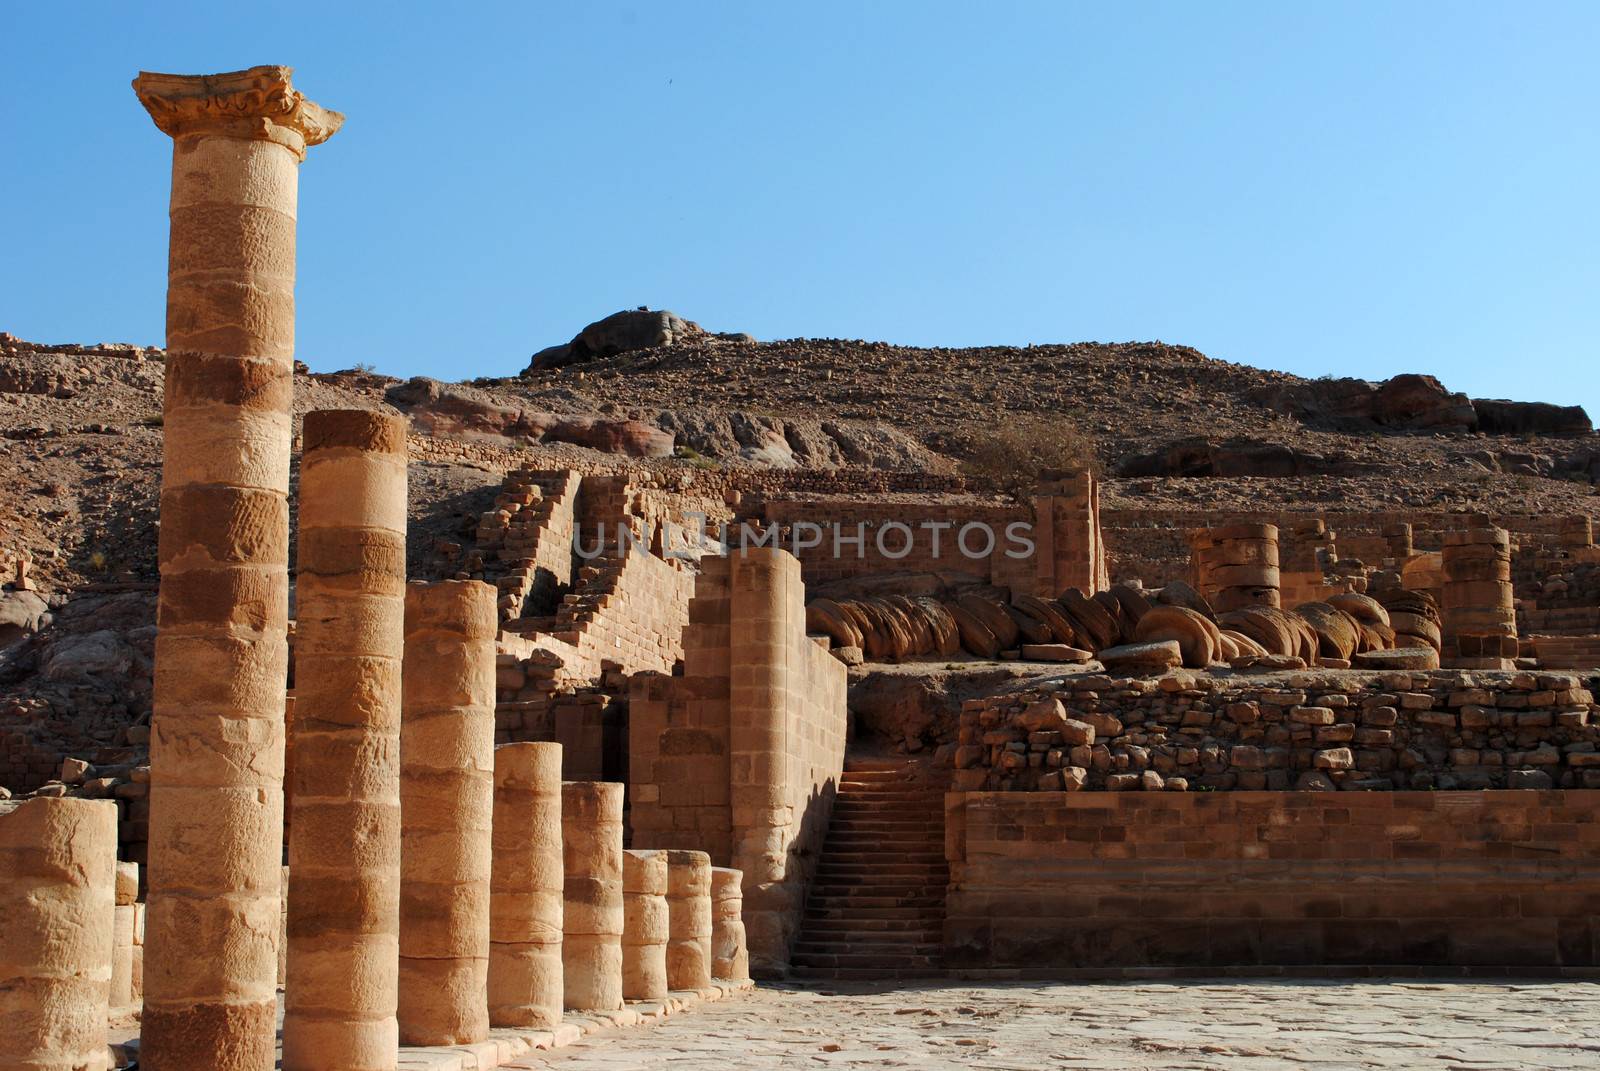 The Great Temple ruins in Petra, Jordan.